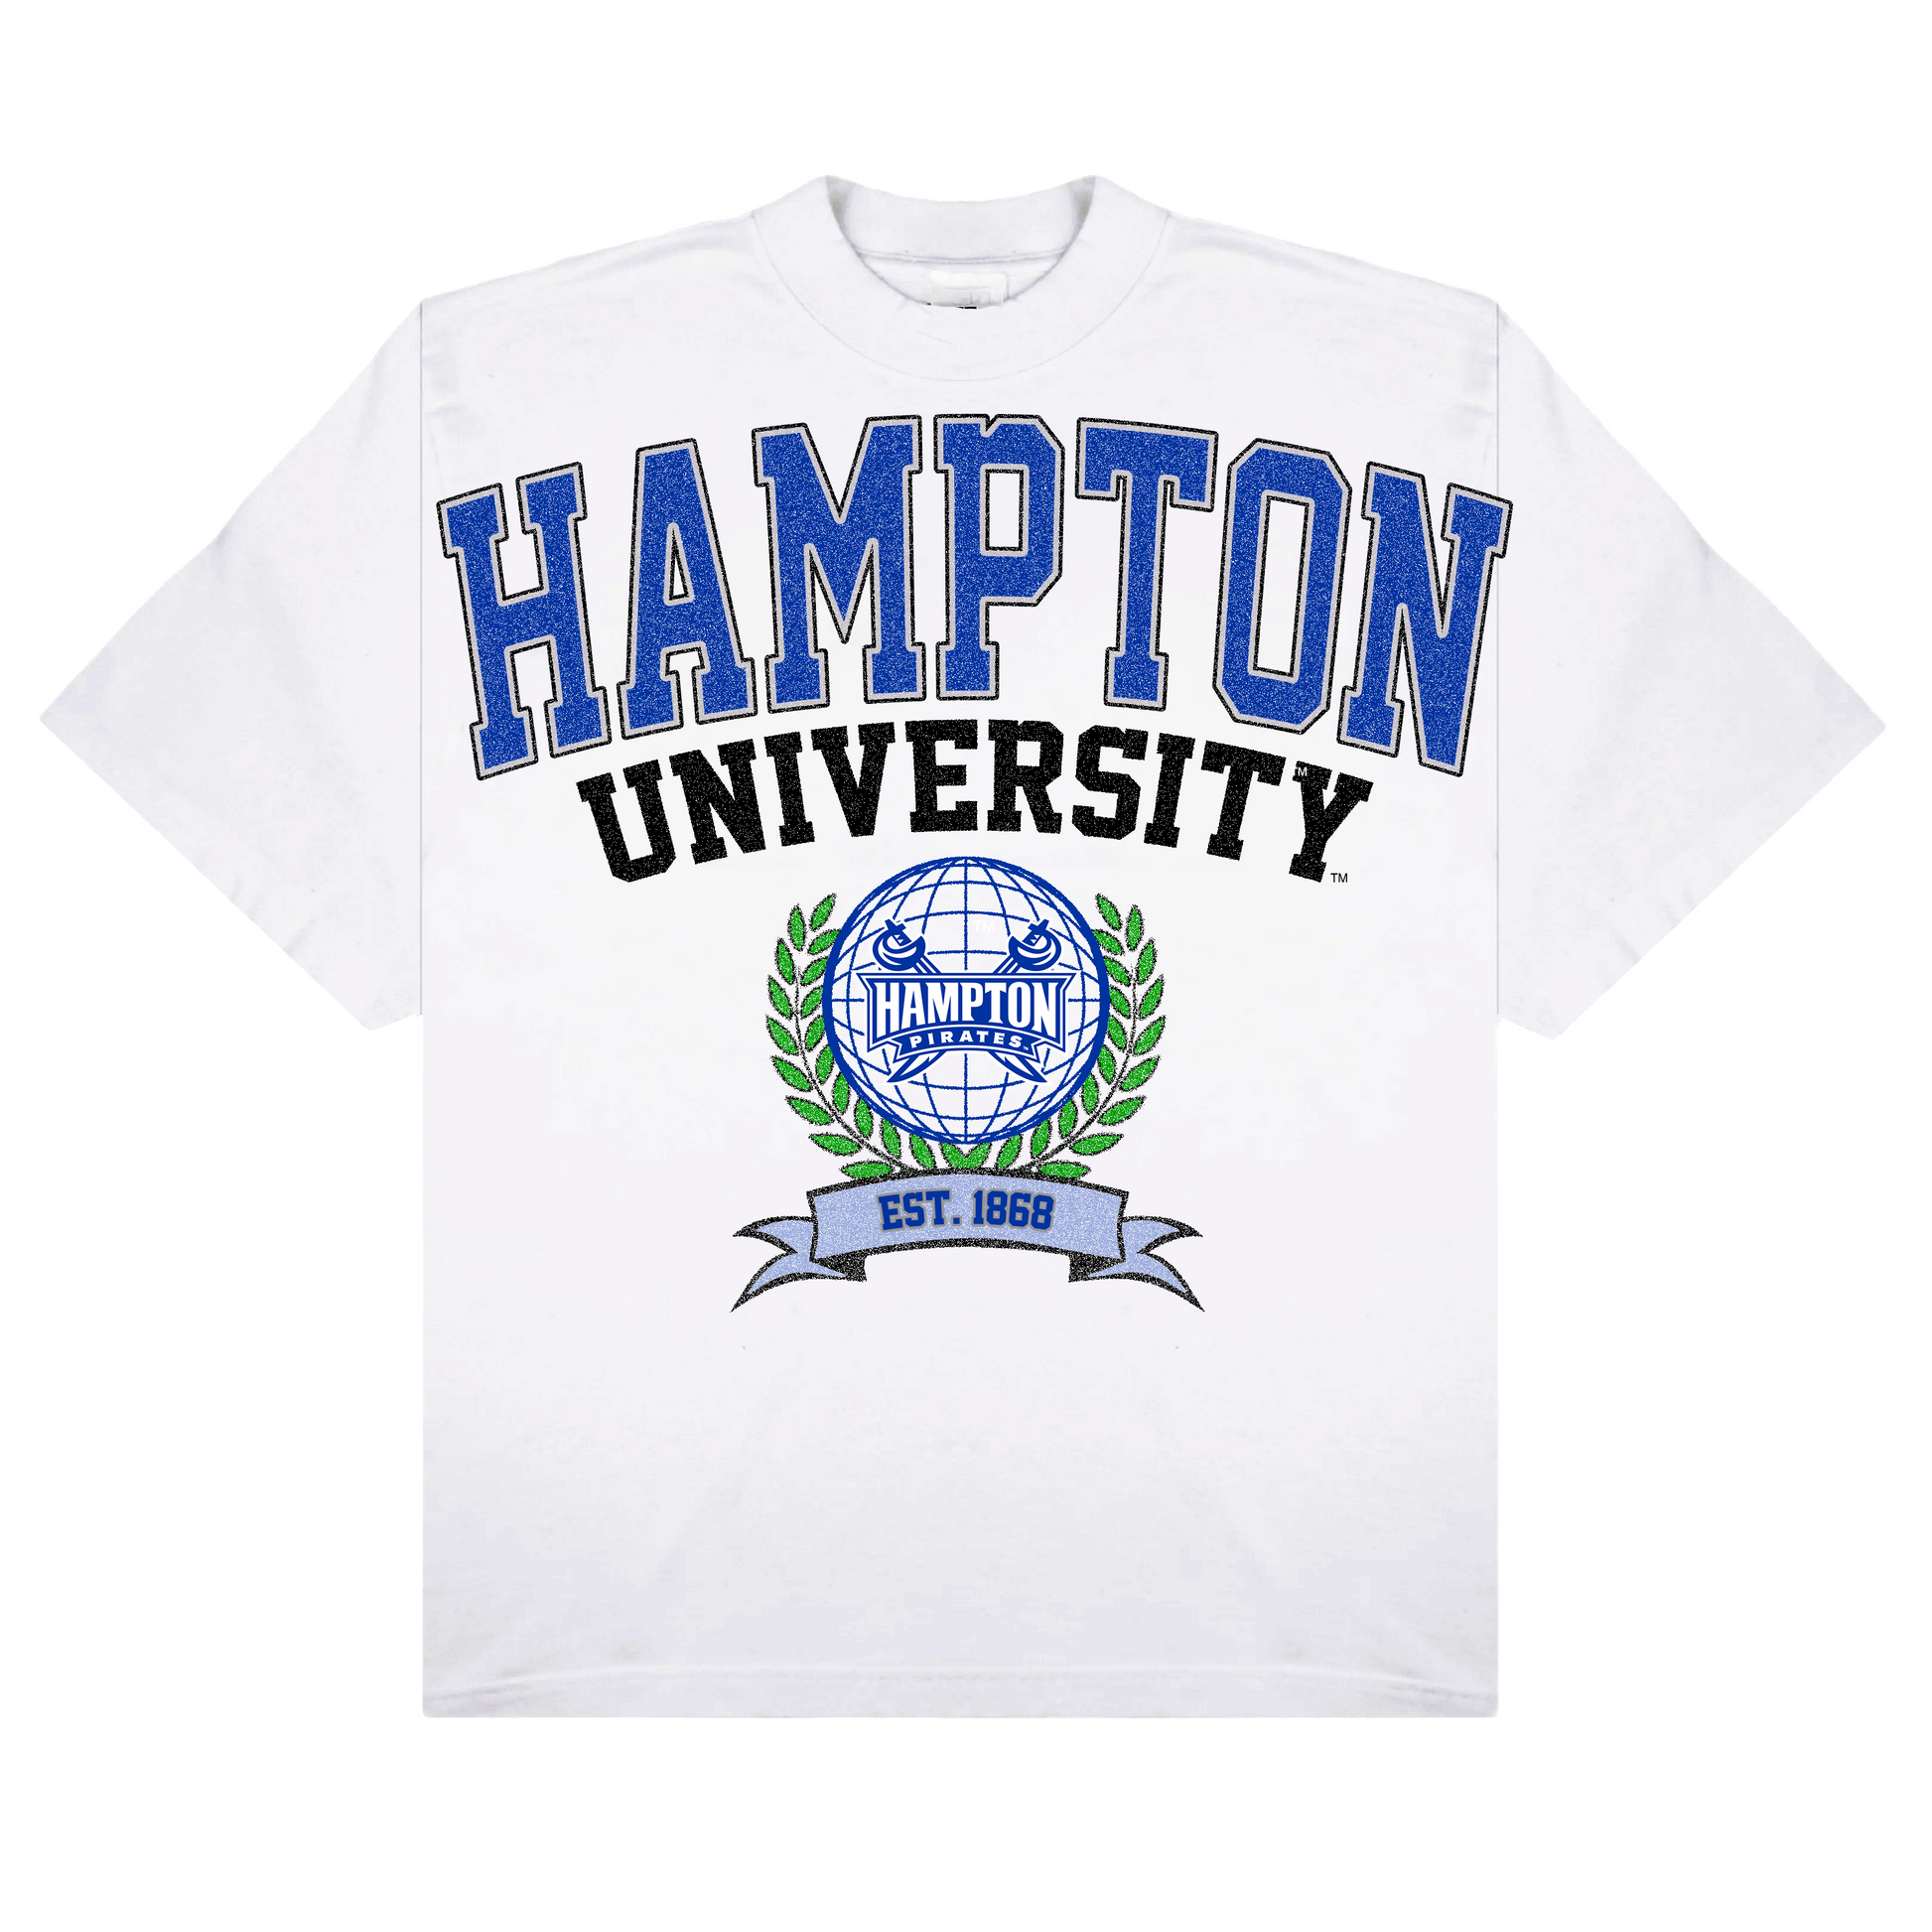 Hampton University T-shirt -  Hampton University Apparel and Clothing - 1921 movement